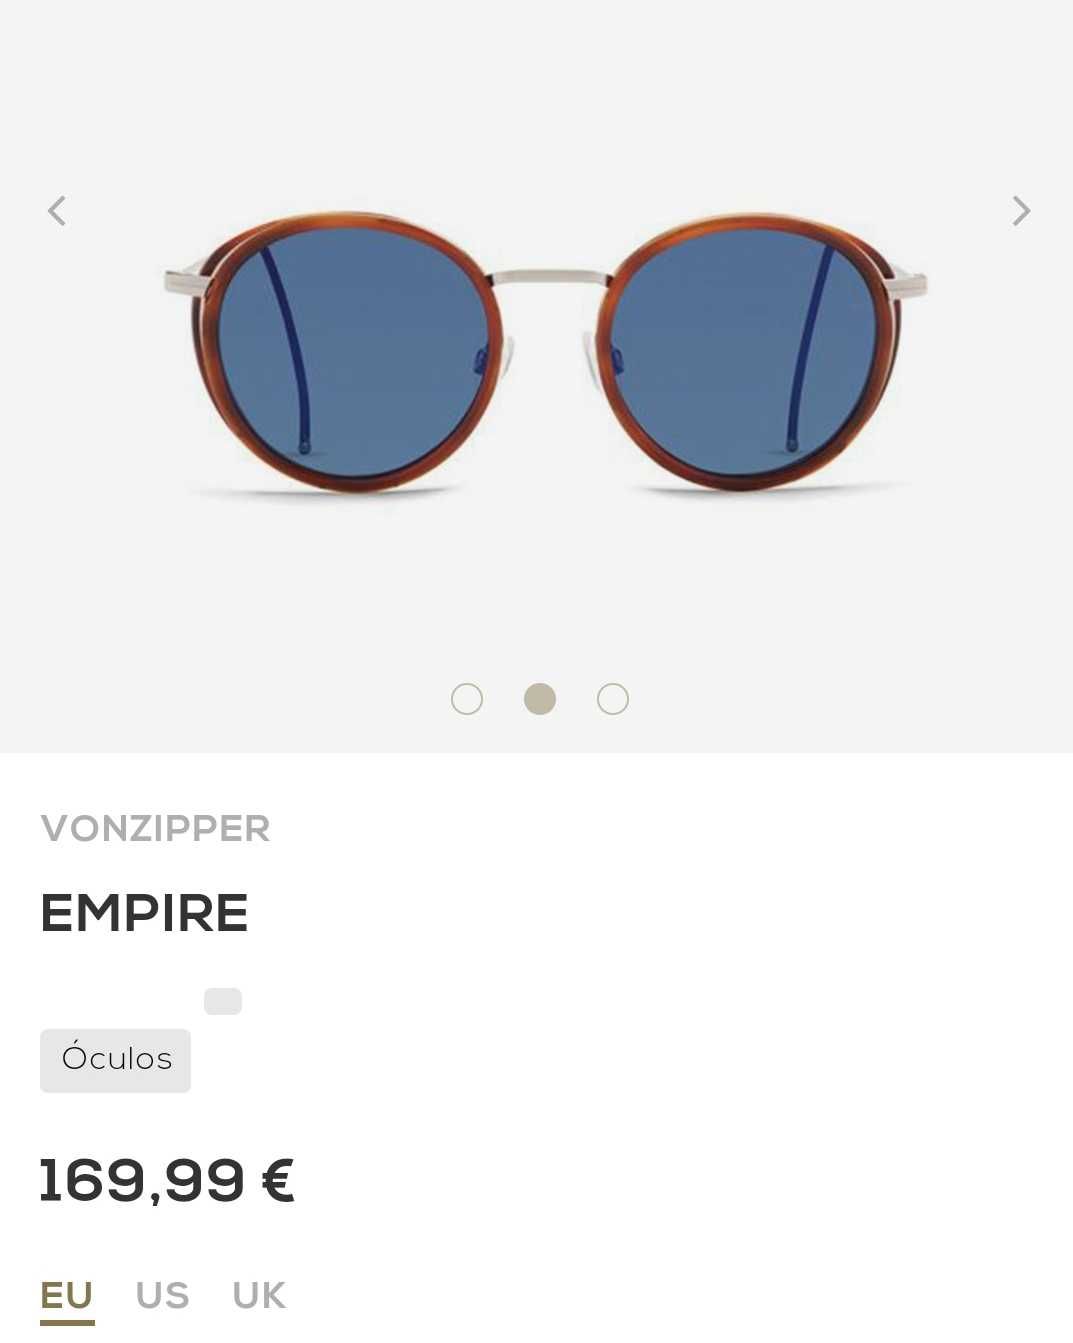 Óculos de sol Vonzipper Empire como novos.